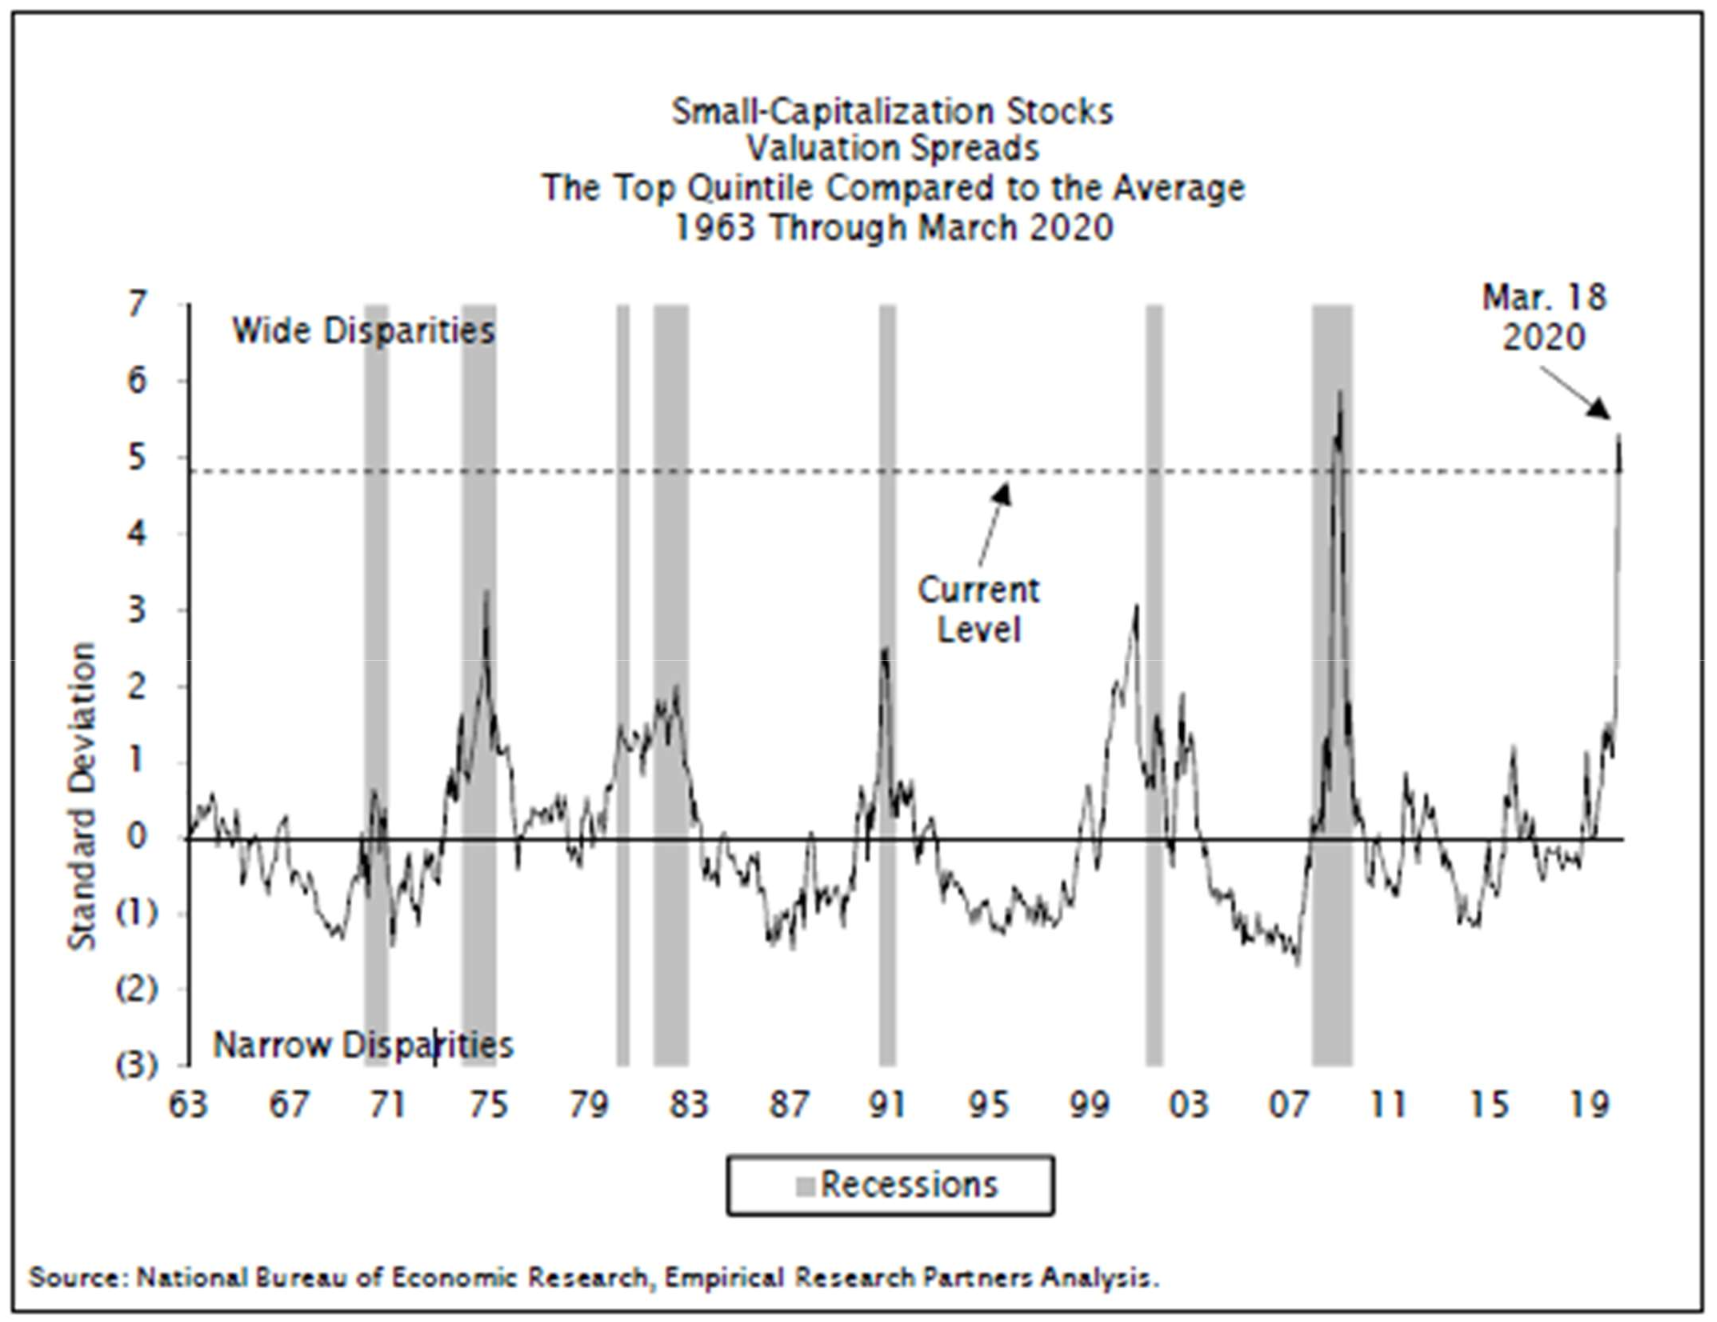 Small-Cap Value Stocks